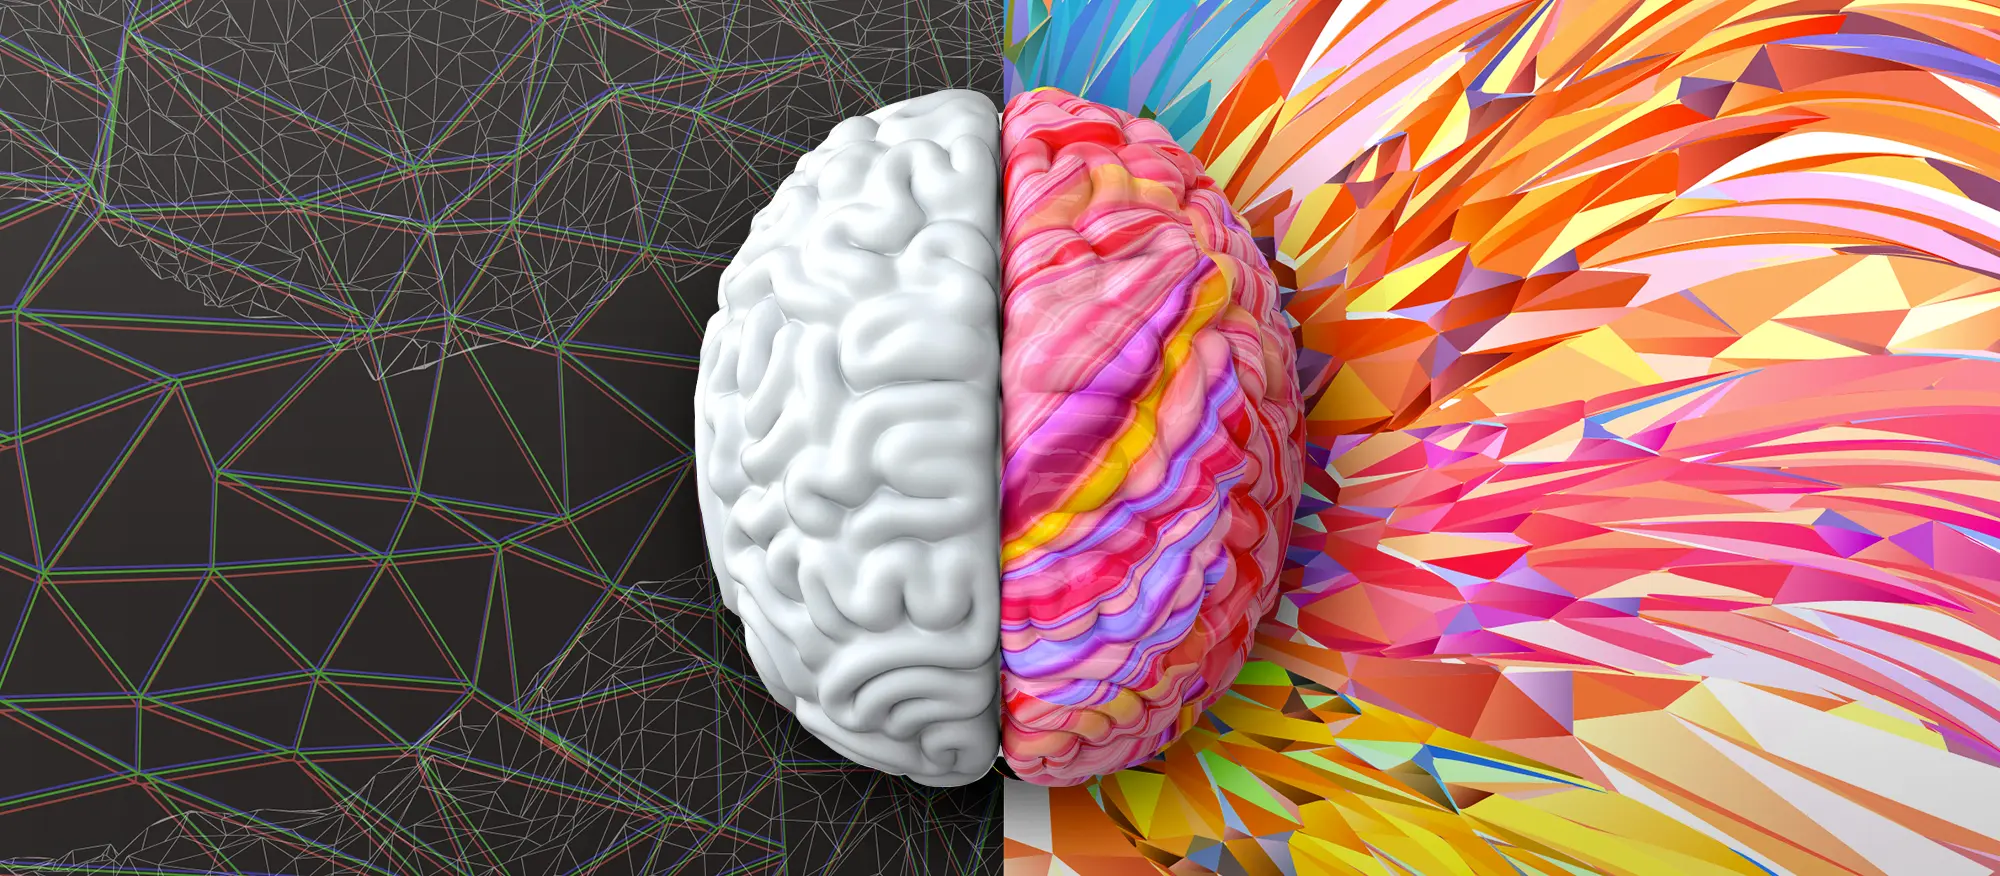 Ilustracao do cerebro humano branco e multicolorido, tipos de criatividade